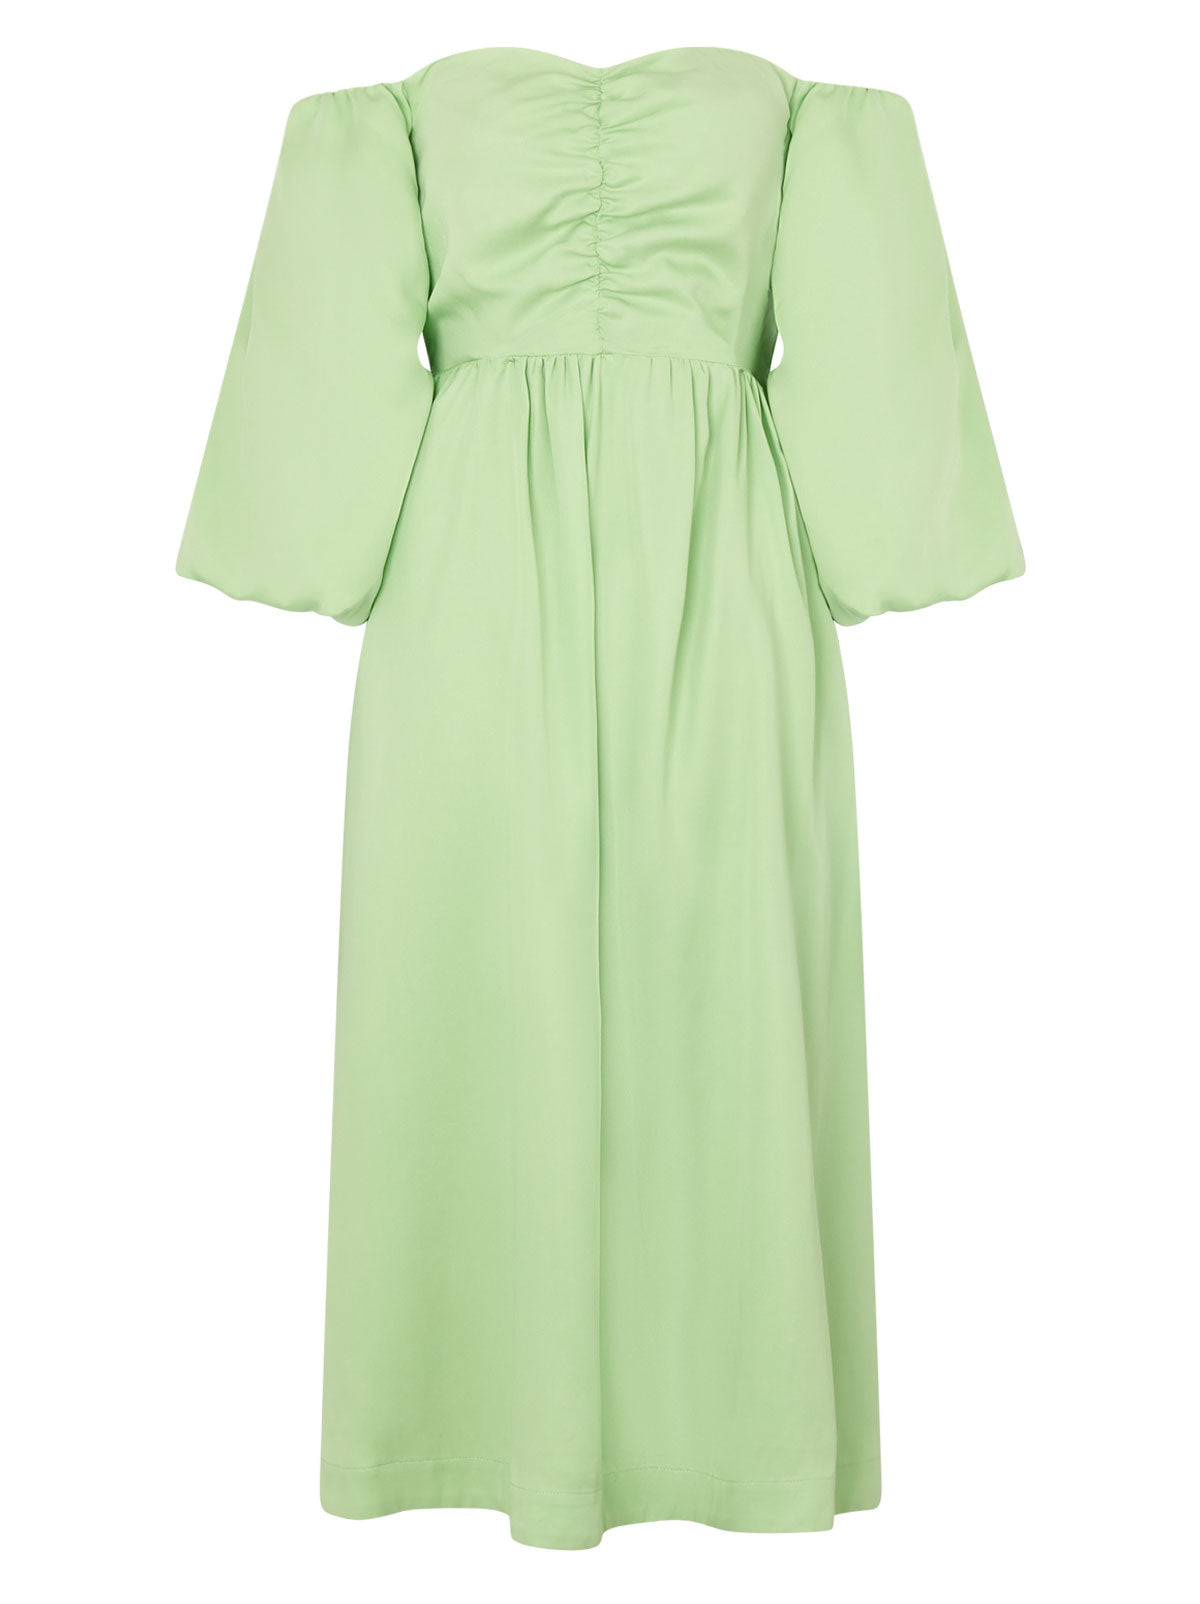 Alexis Green Bardot Midi Dress by KITRI Studio